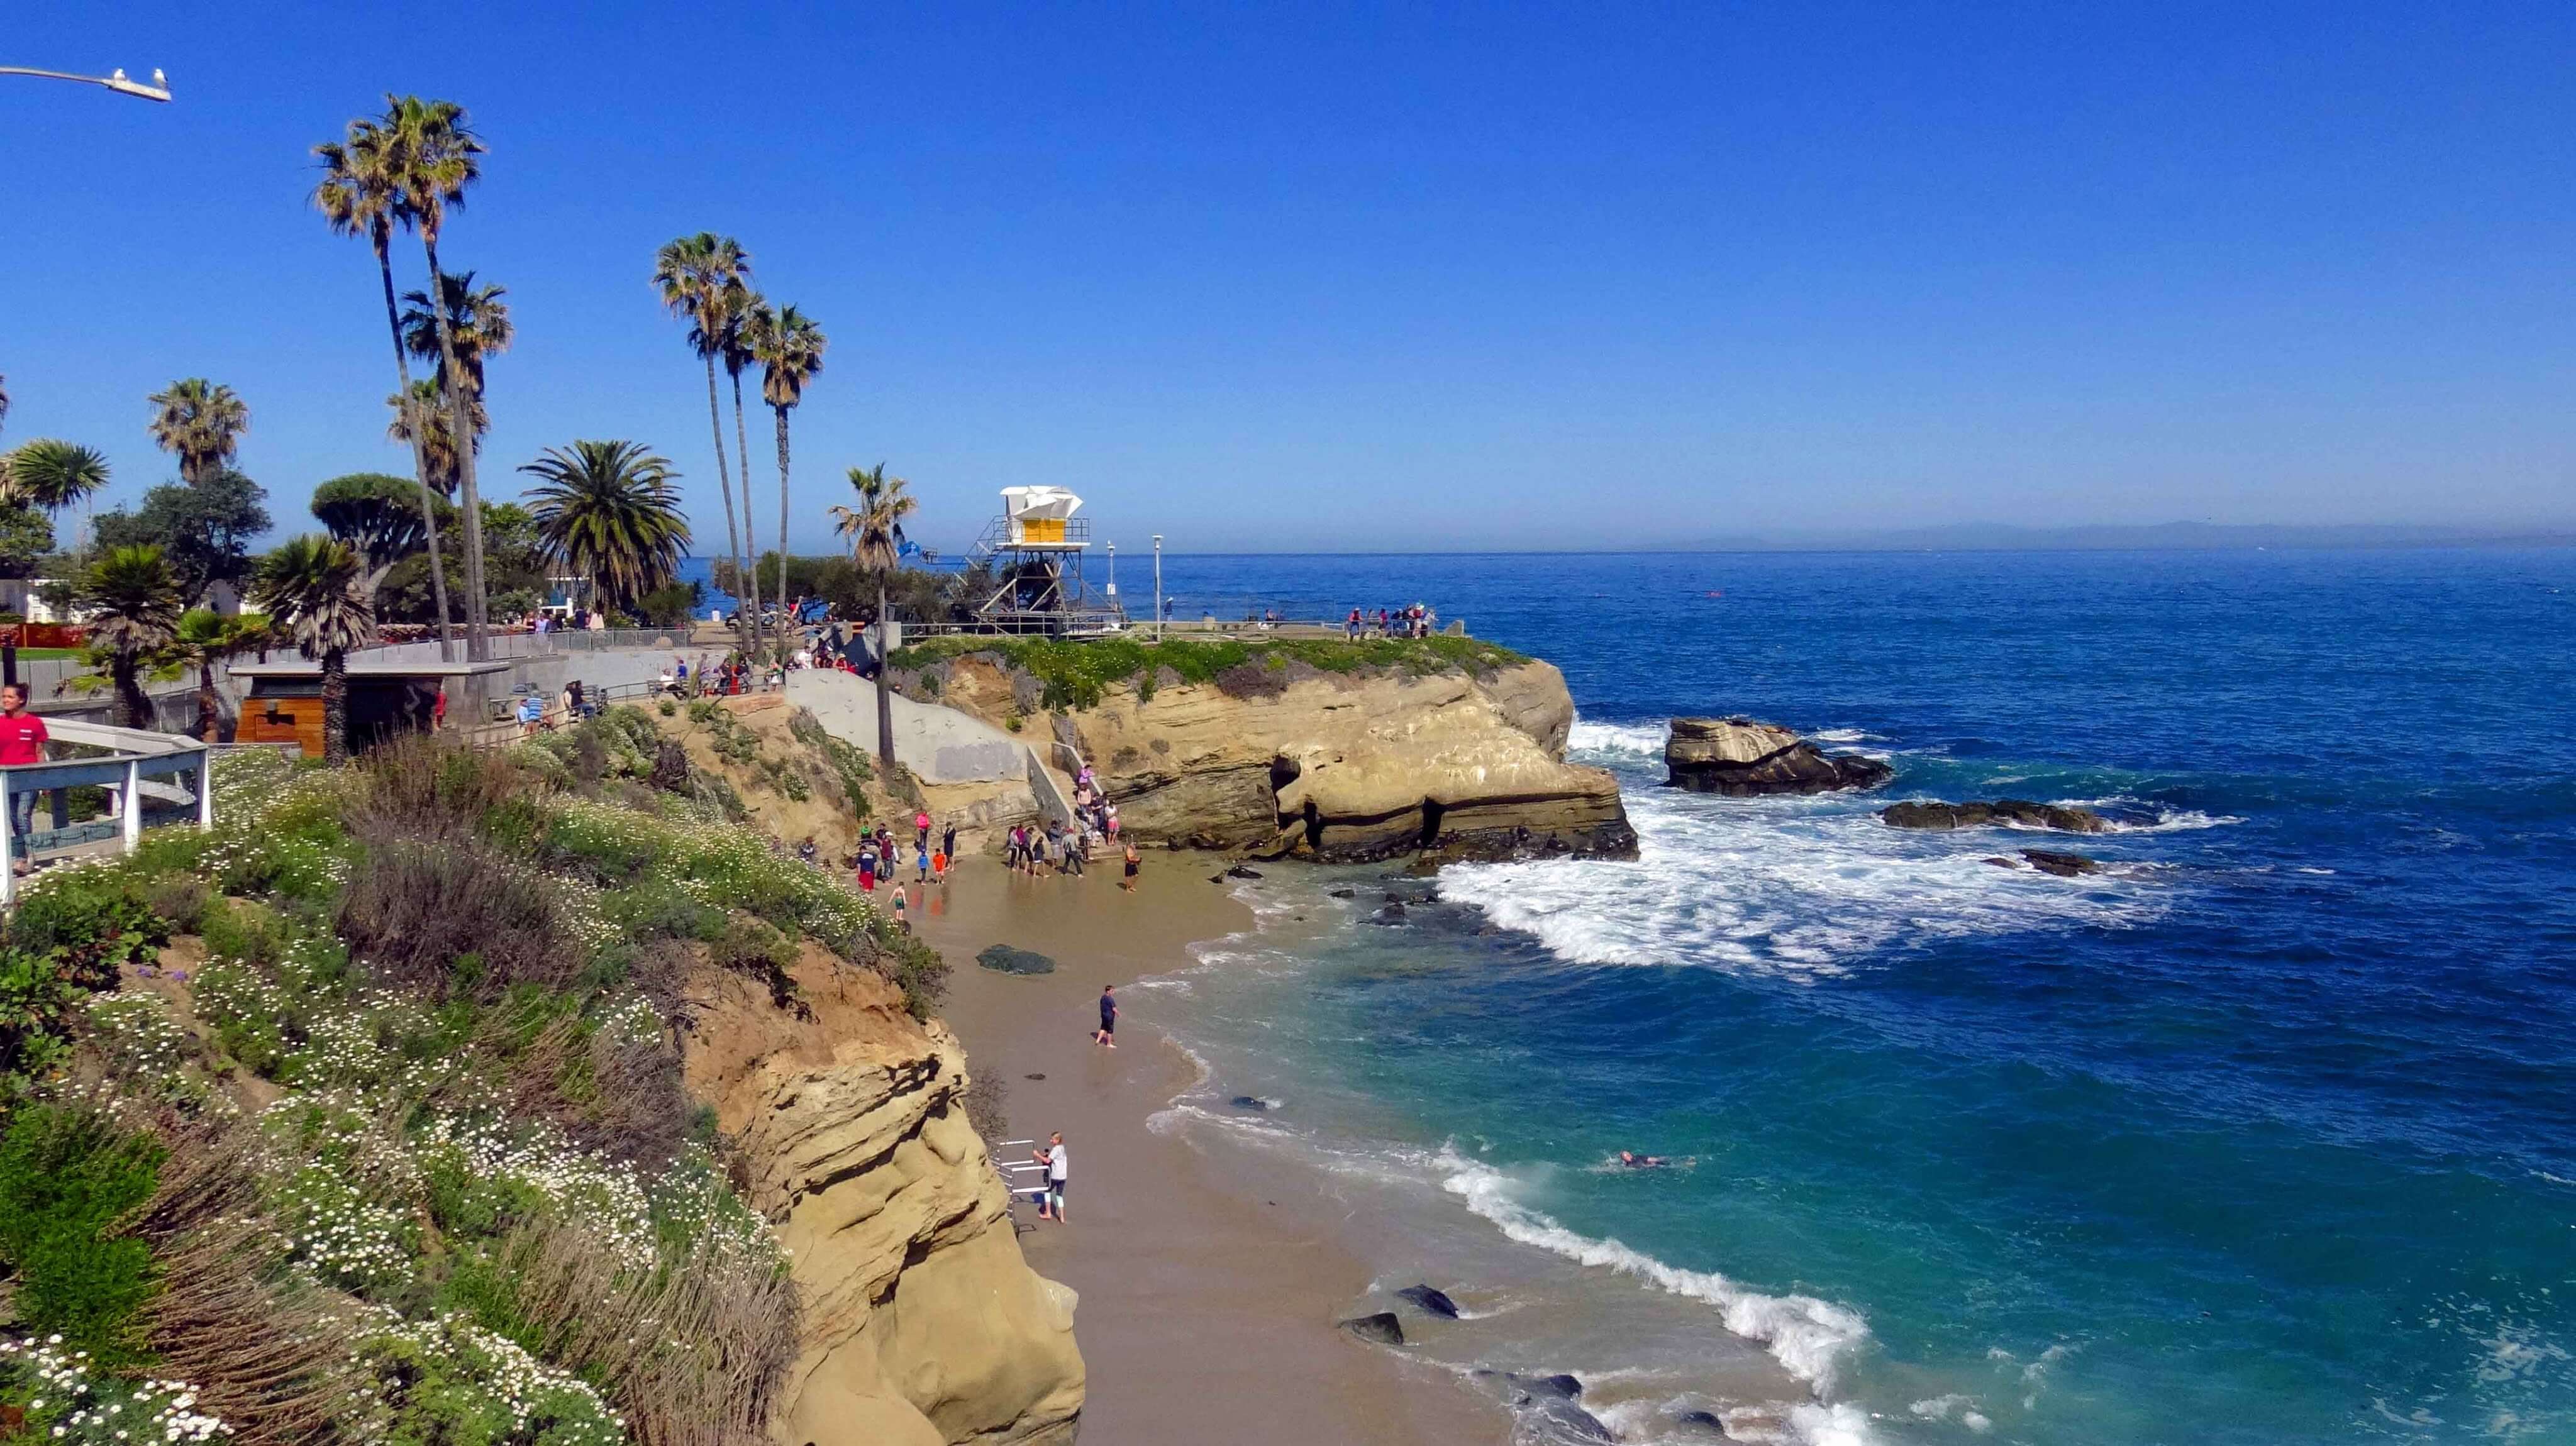 La Jolla, San Diego: california beaches